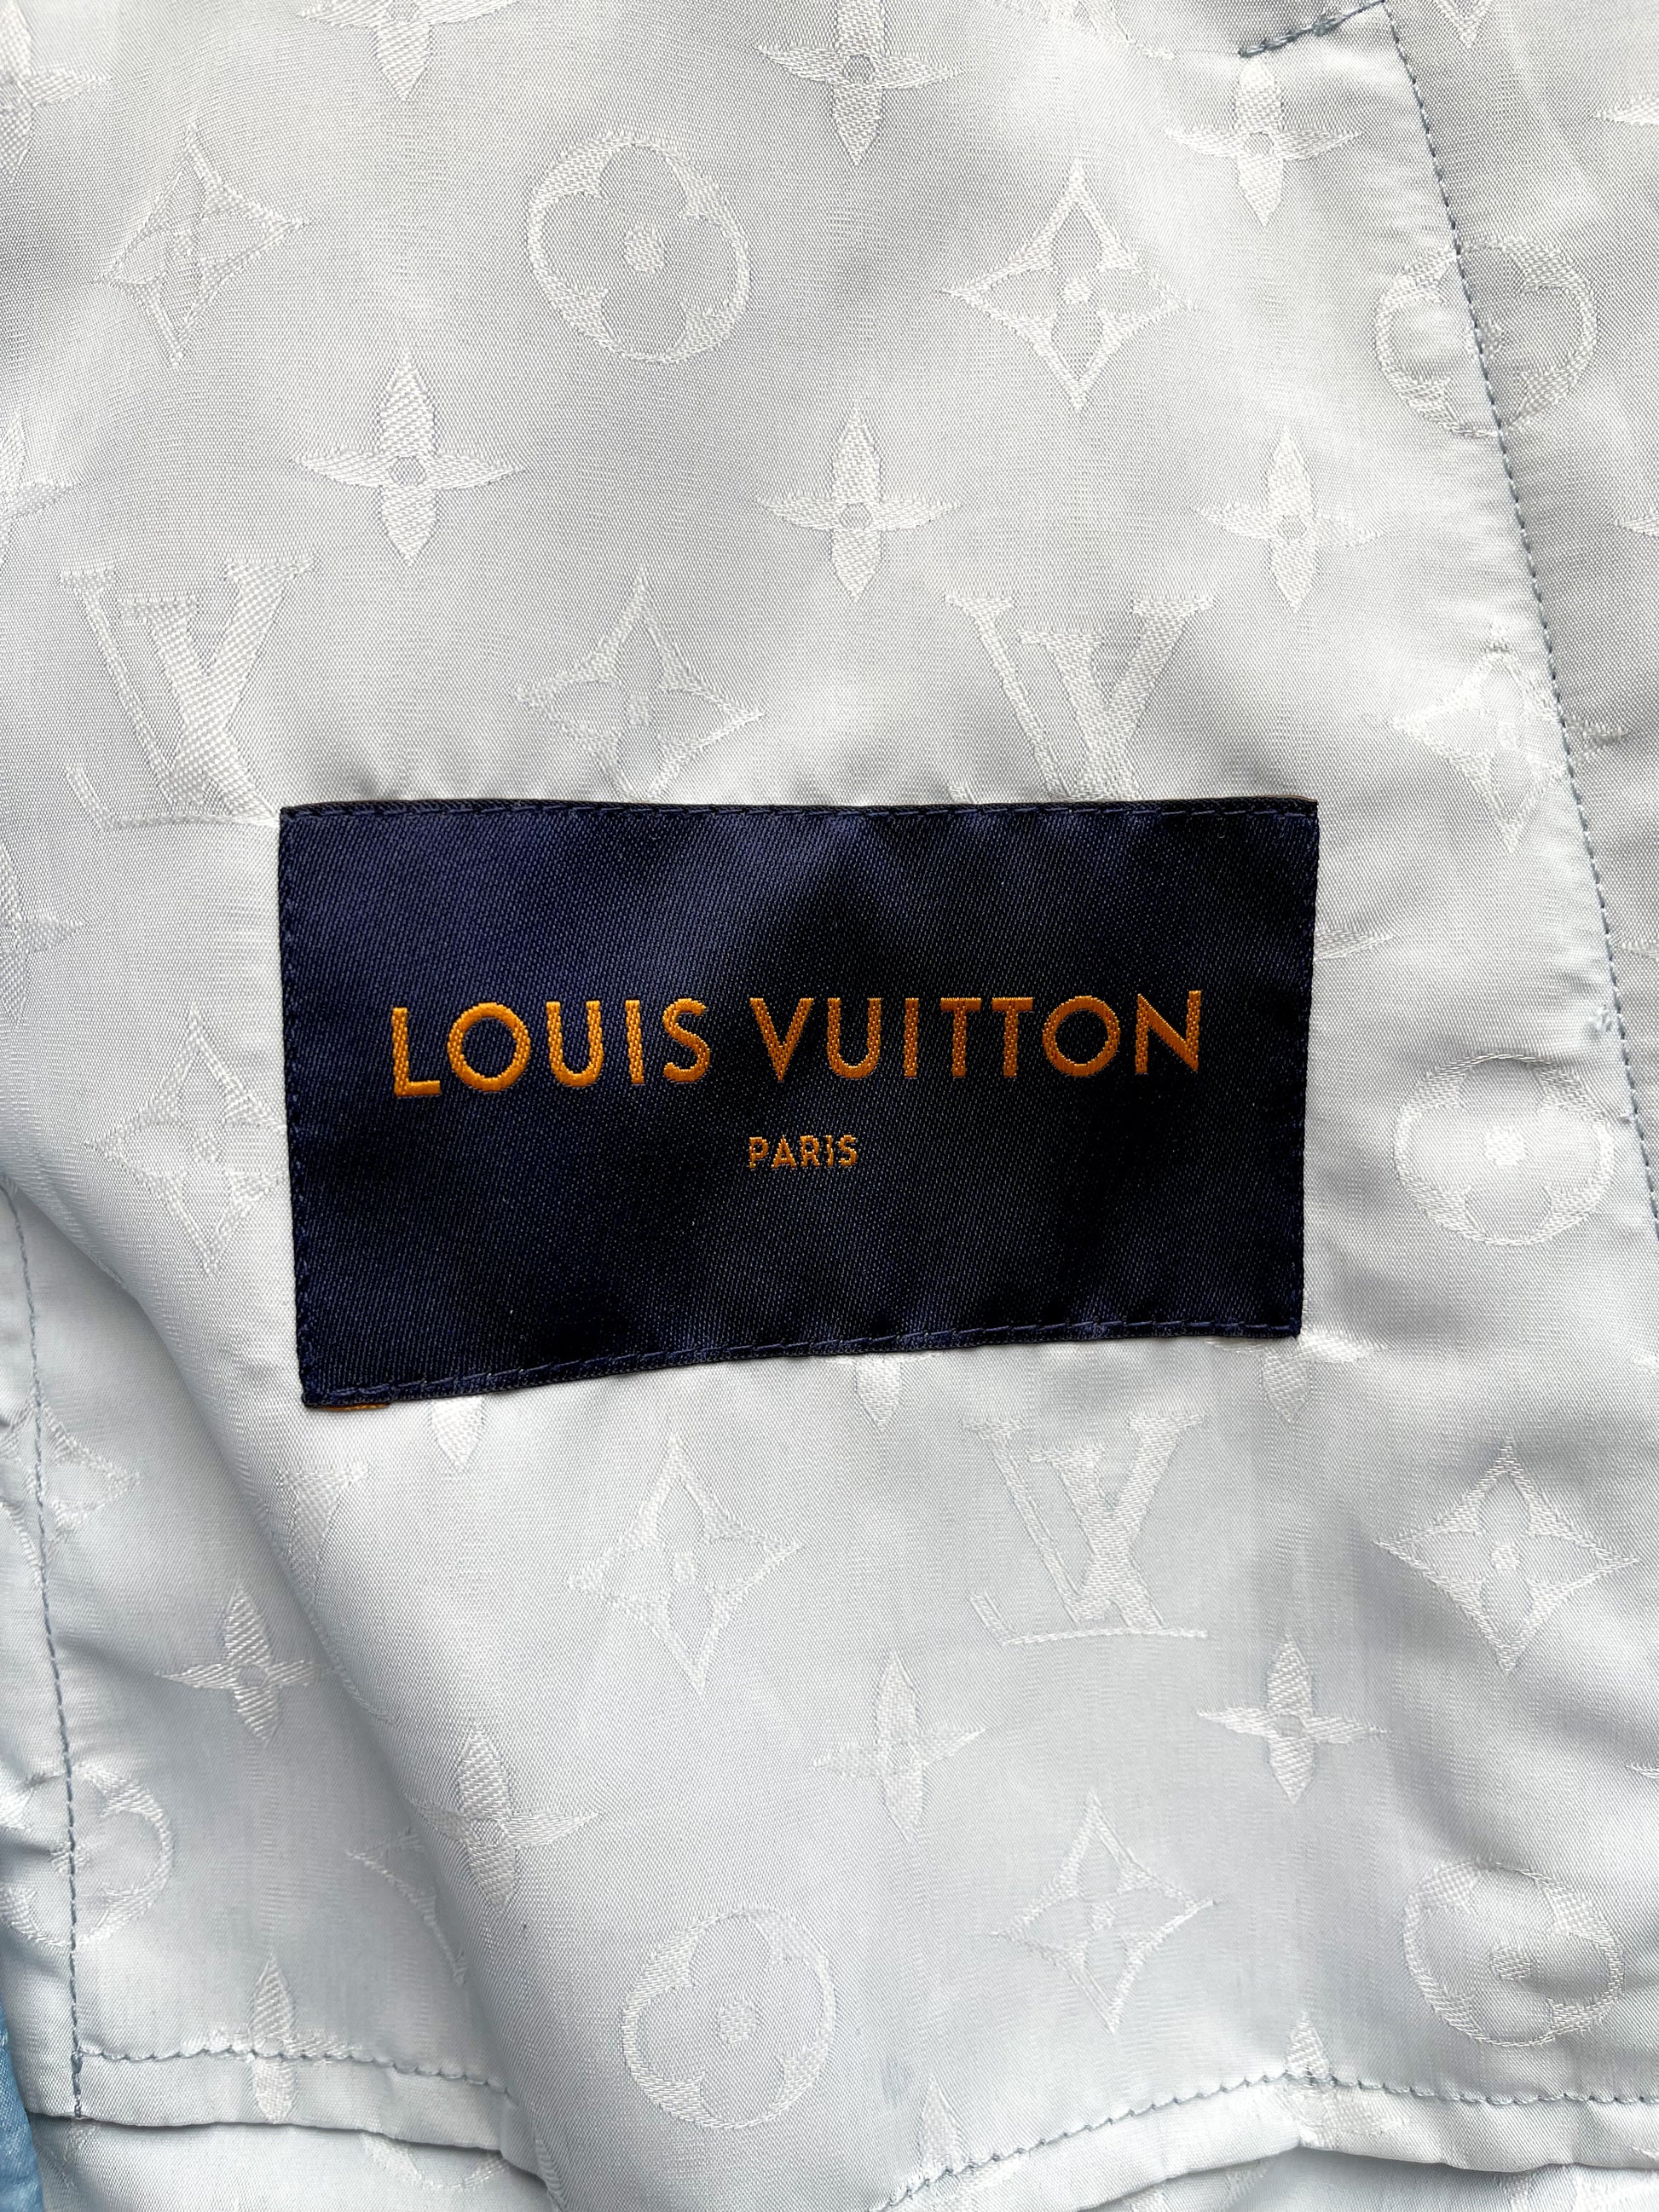 Louis Vuitton 2020 Monogram Clouds Windbreaker - Blue Outerwear